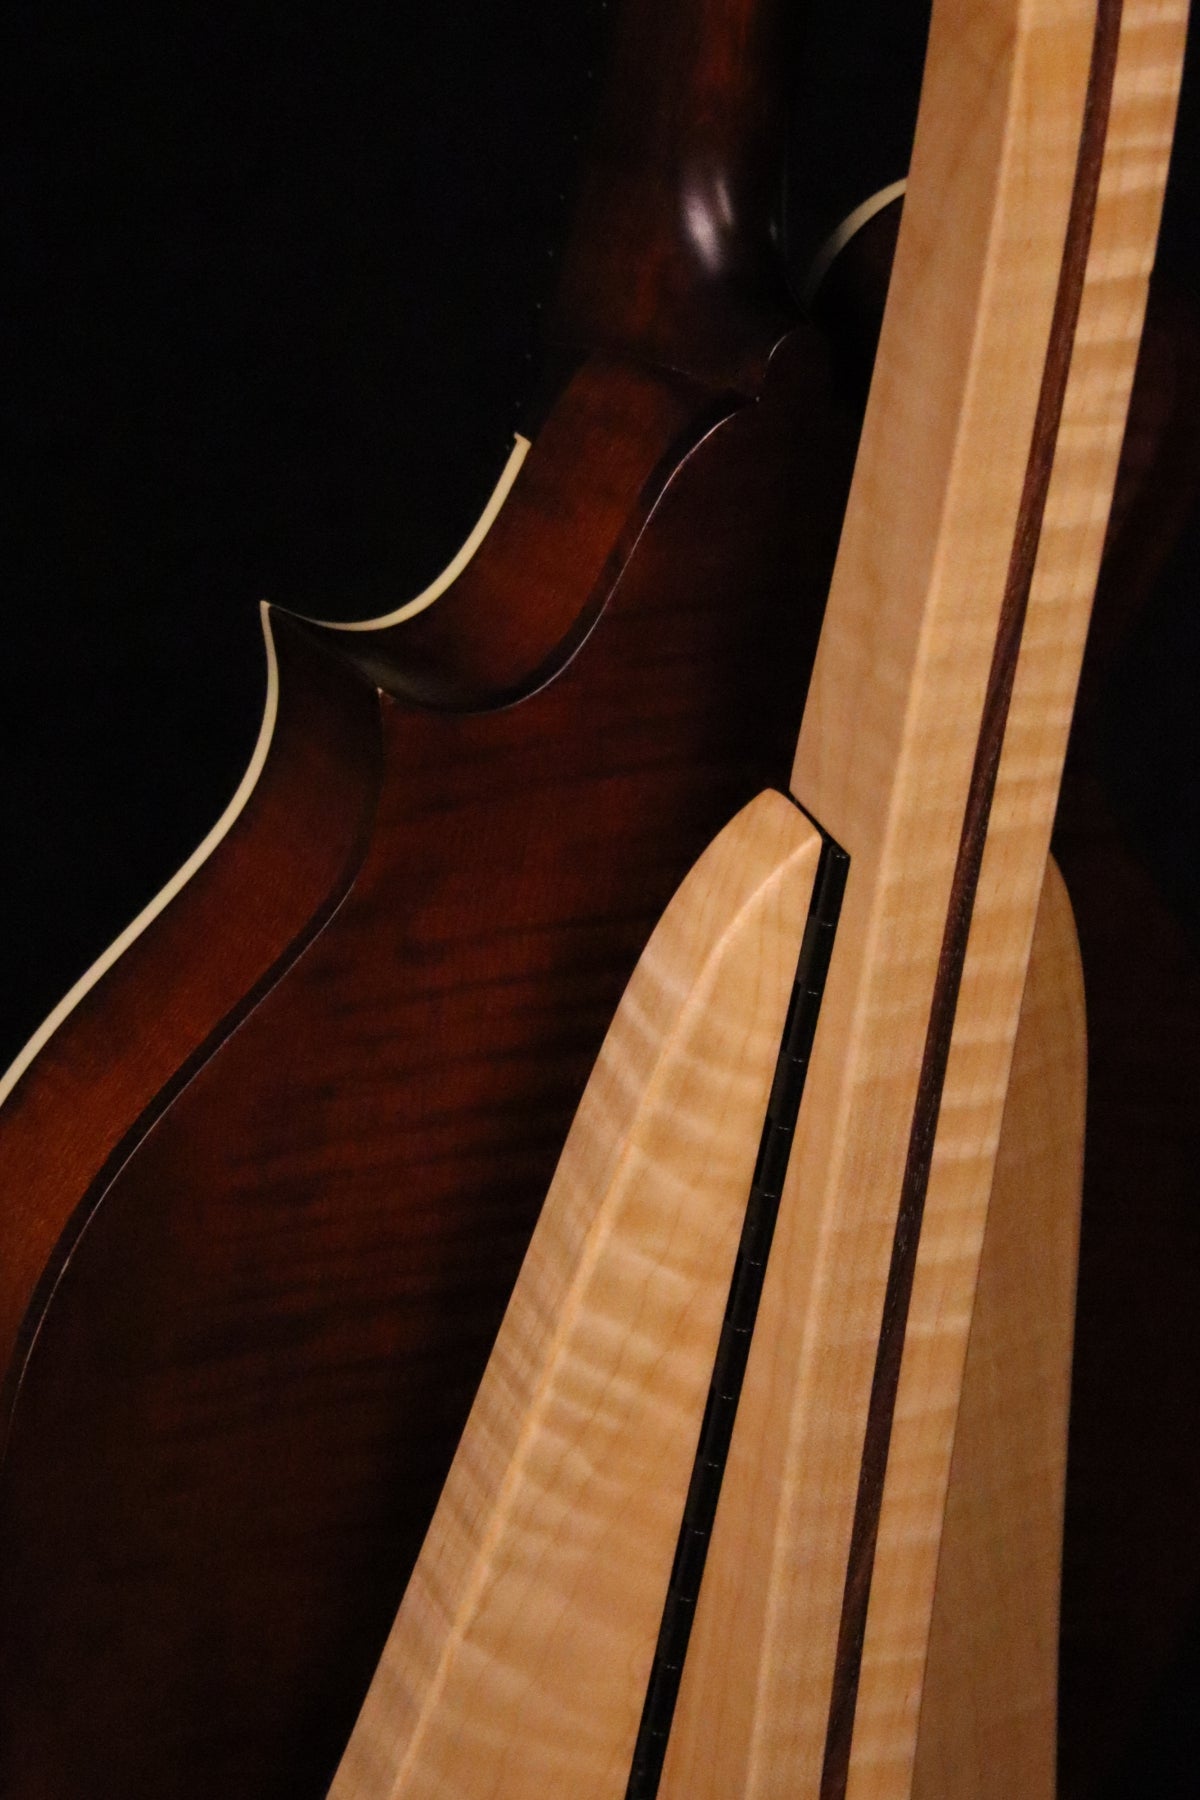 Folding curly maple and walnut wood mandolin floor stand closeup rear image with Eastman mandolin